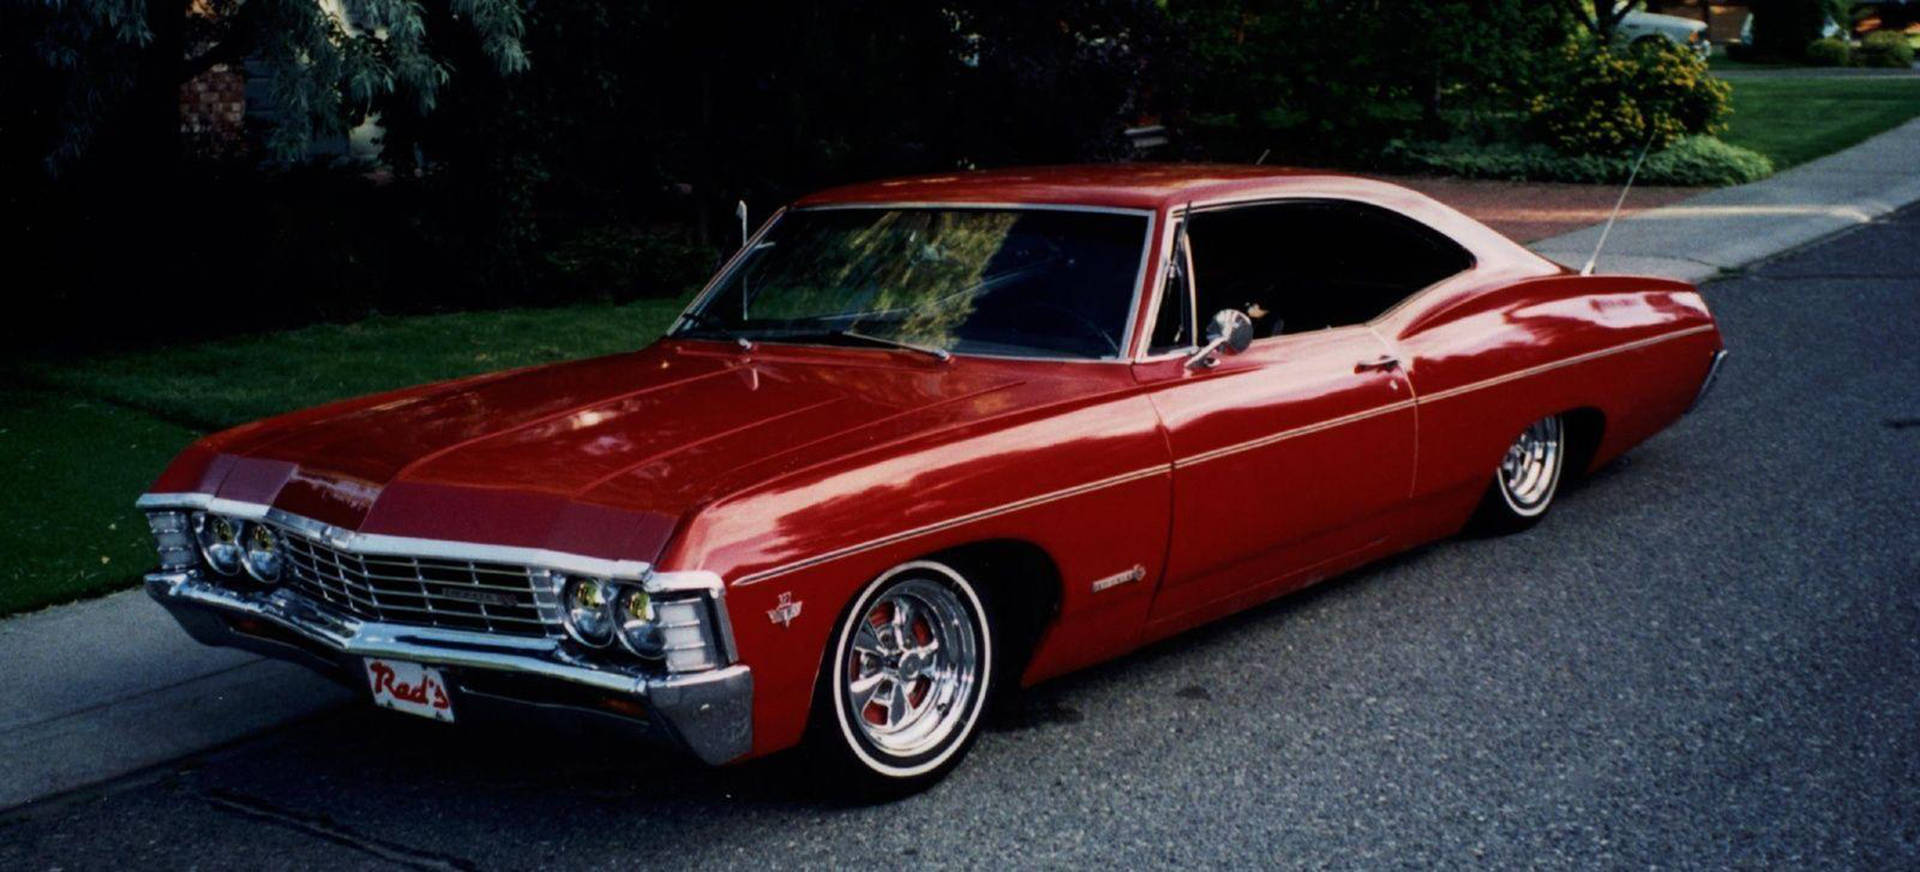 Majestic Red 1967 Chevrolet Impala Showcasing Vintage Beauty